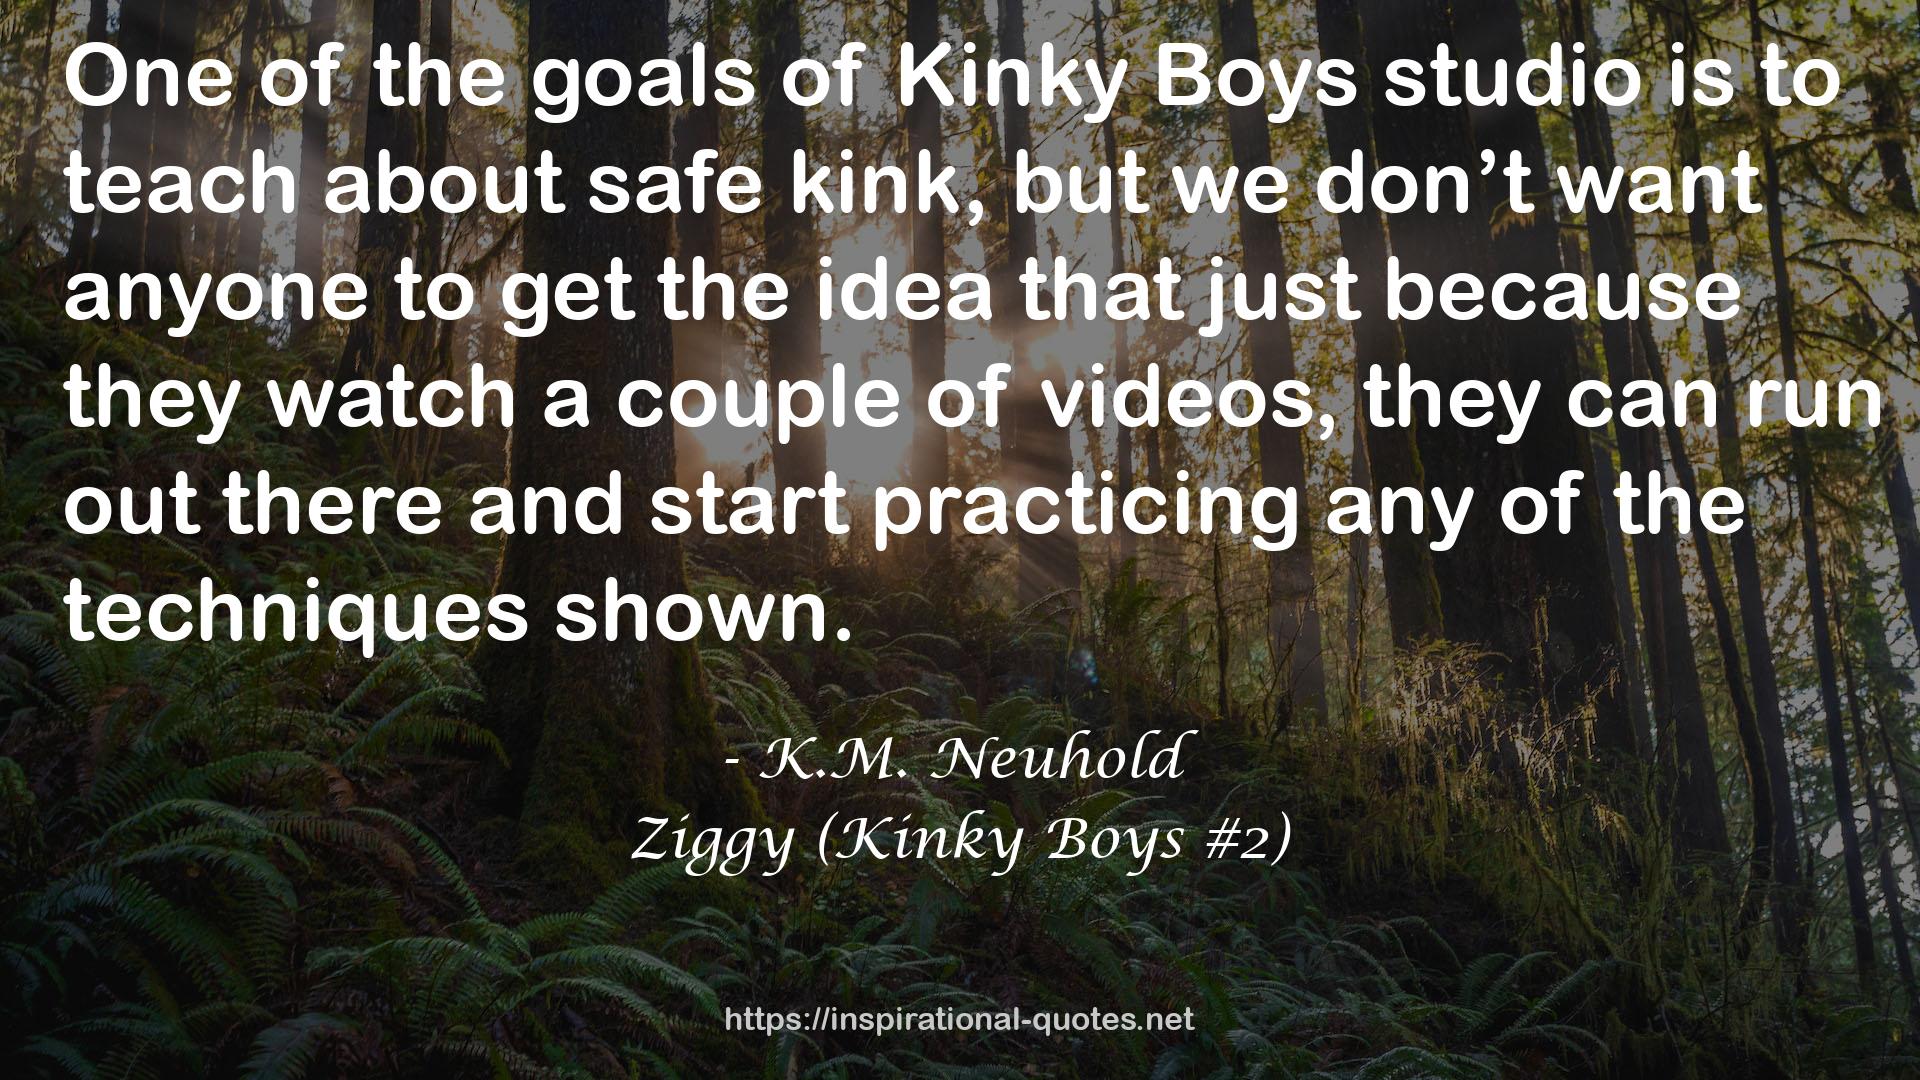 Ziggy (Kinky Boys #2) QUOTES